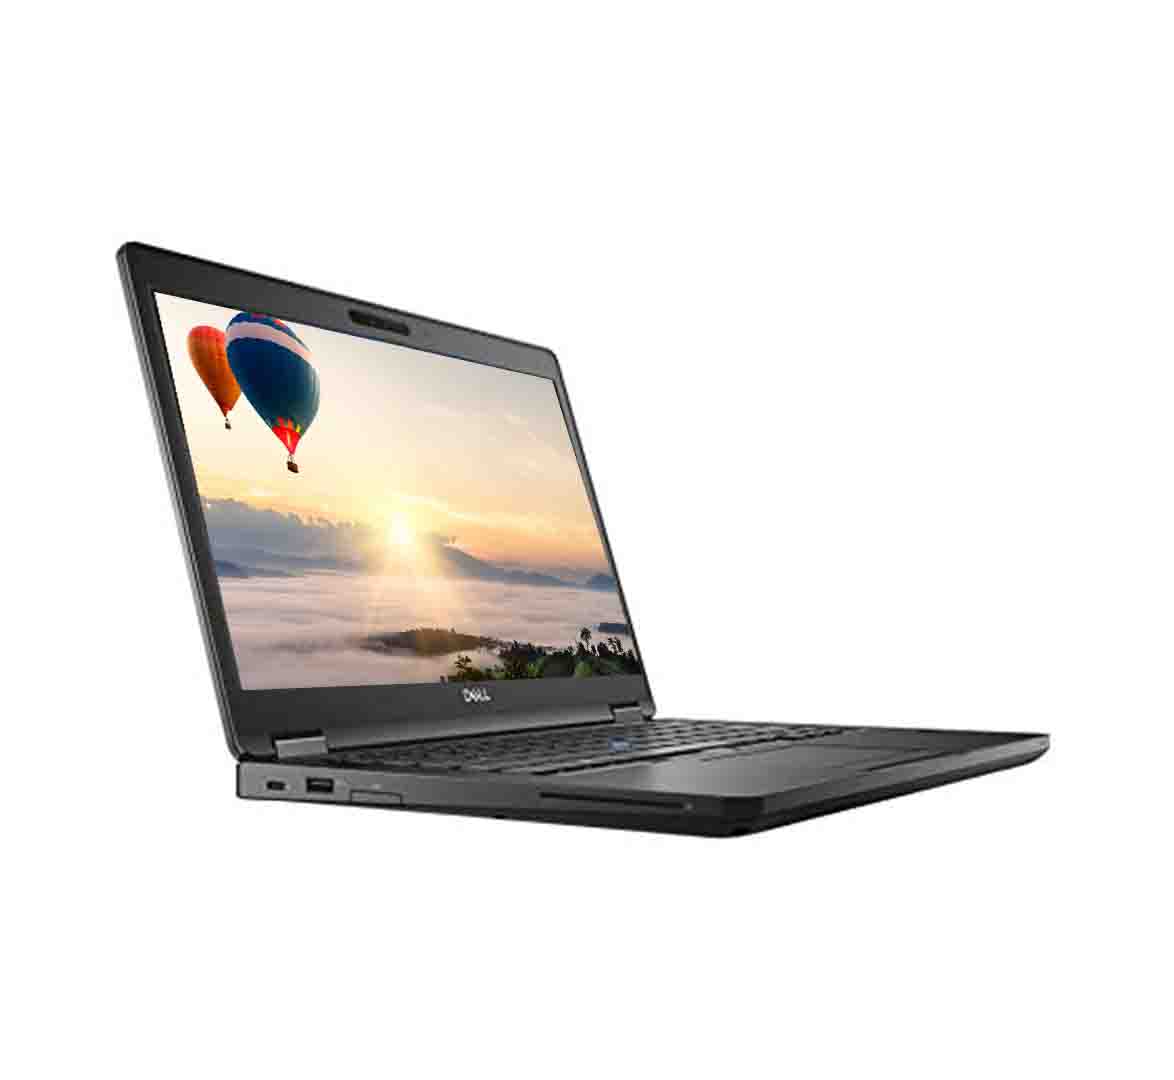 Dell Latitude 5490 Business Laptop, Intel Core i5-8th Gen CPU, 8GB RAM, 256GB SSD, 14 inch Display, Windows 10 Pro